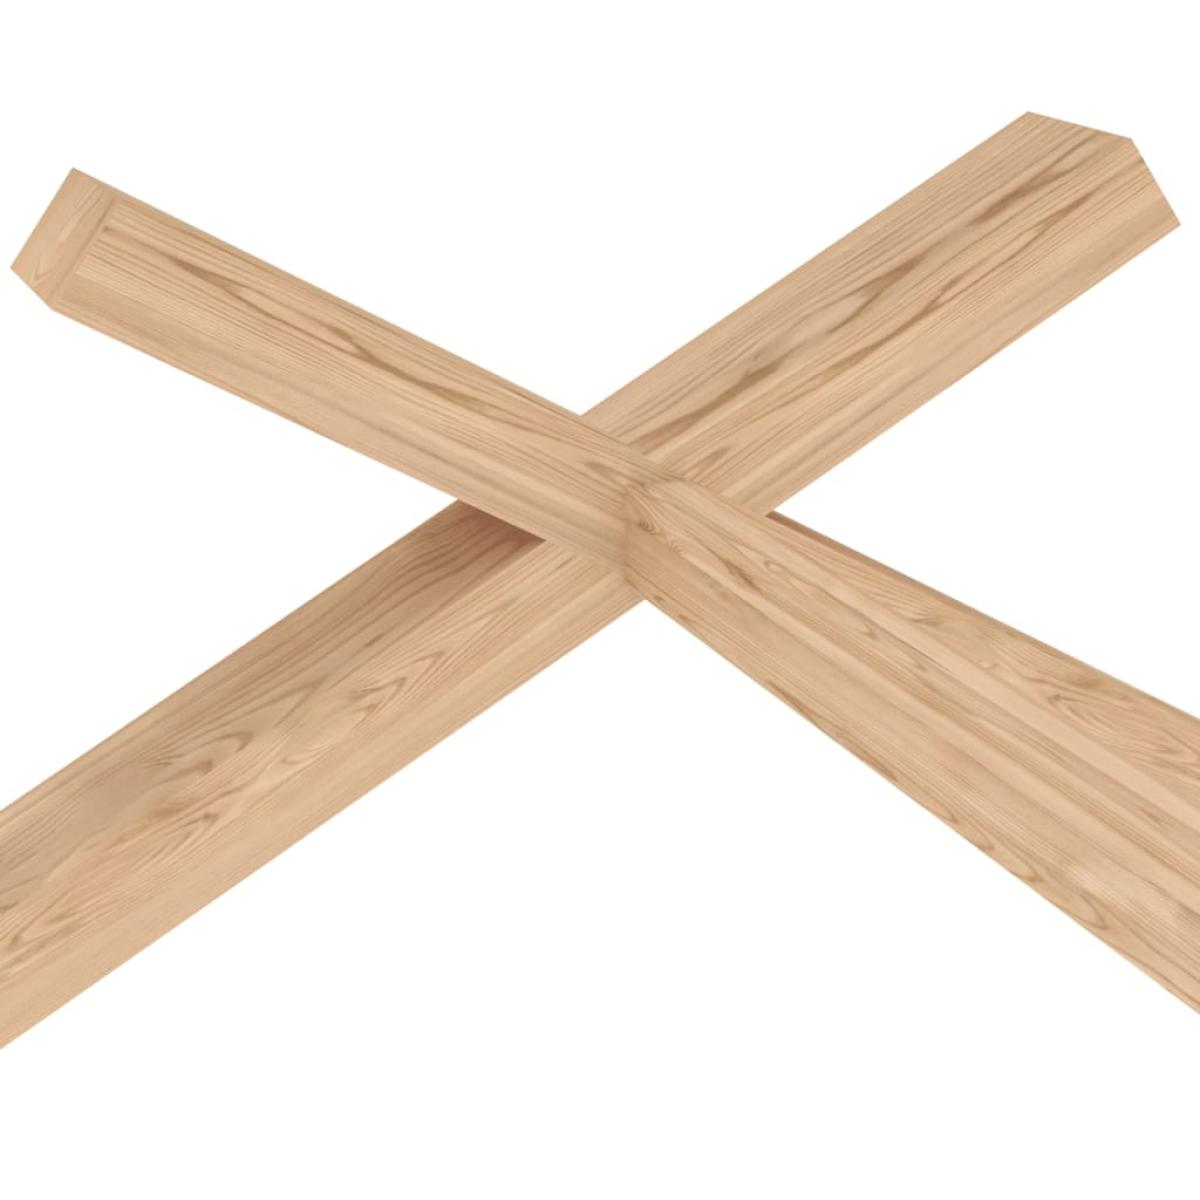 Estructura de cama infantil con cajón madera de pino 70x140 cm